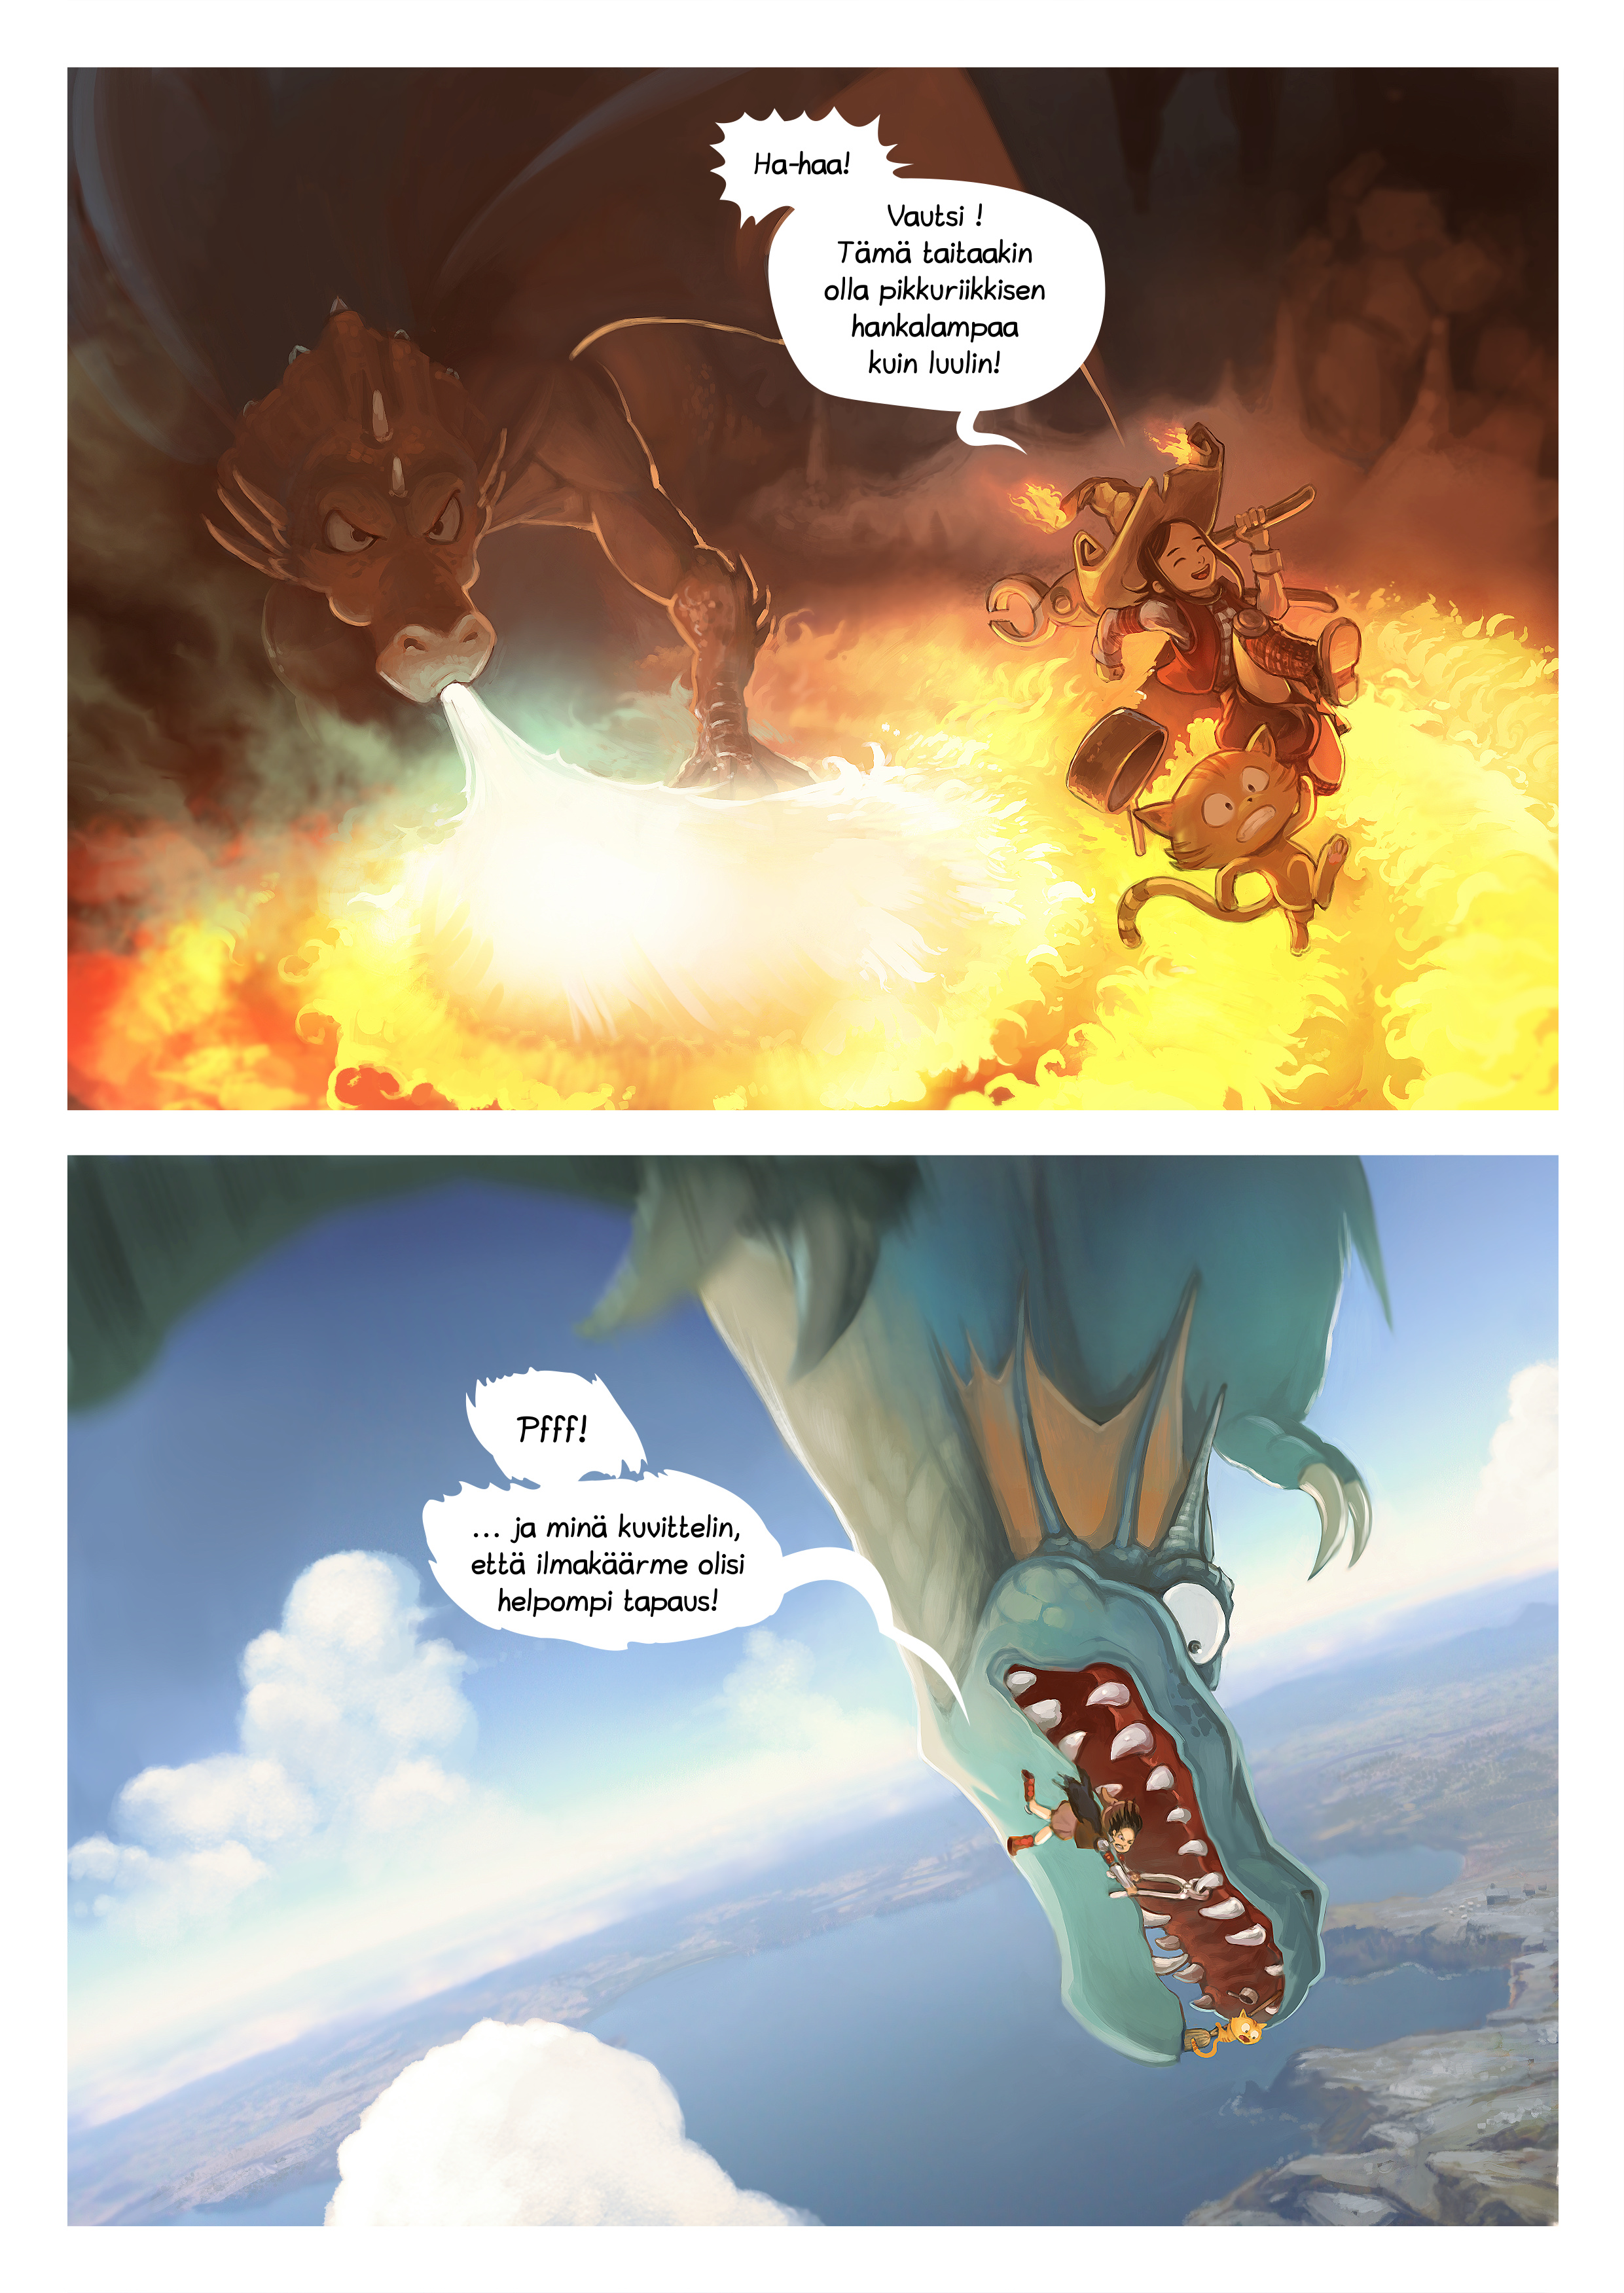 Episodi 14: Lohikäärmeen hammas, Page 3